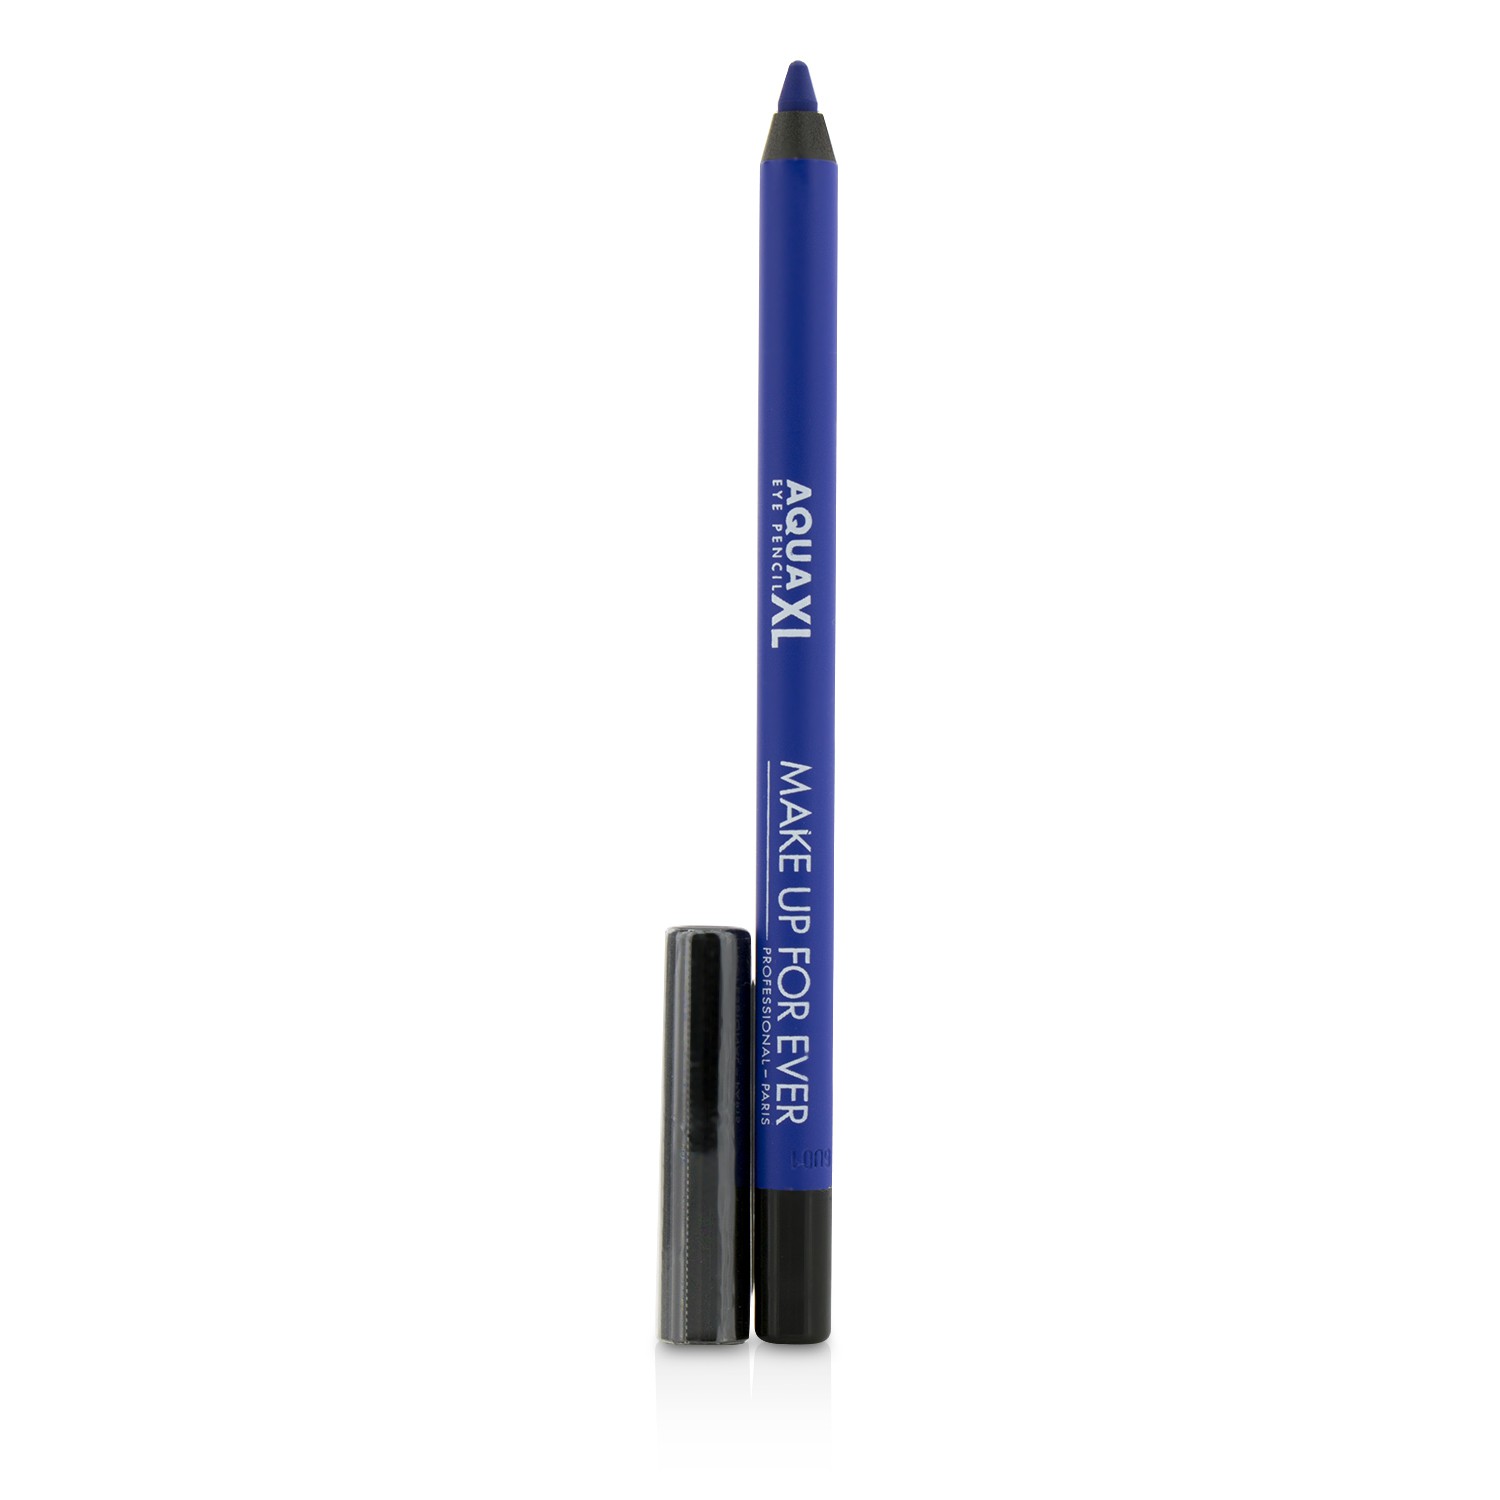 Aqua XL Extra Long Lasting Waterproof Eye Pencil - # M-22 (Matte Majorelle Blue) Make Up For Ever Image